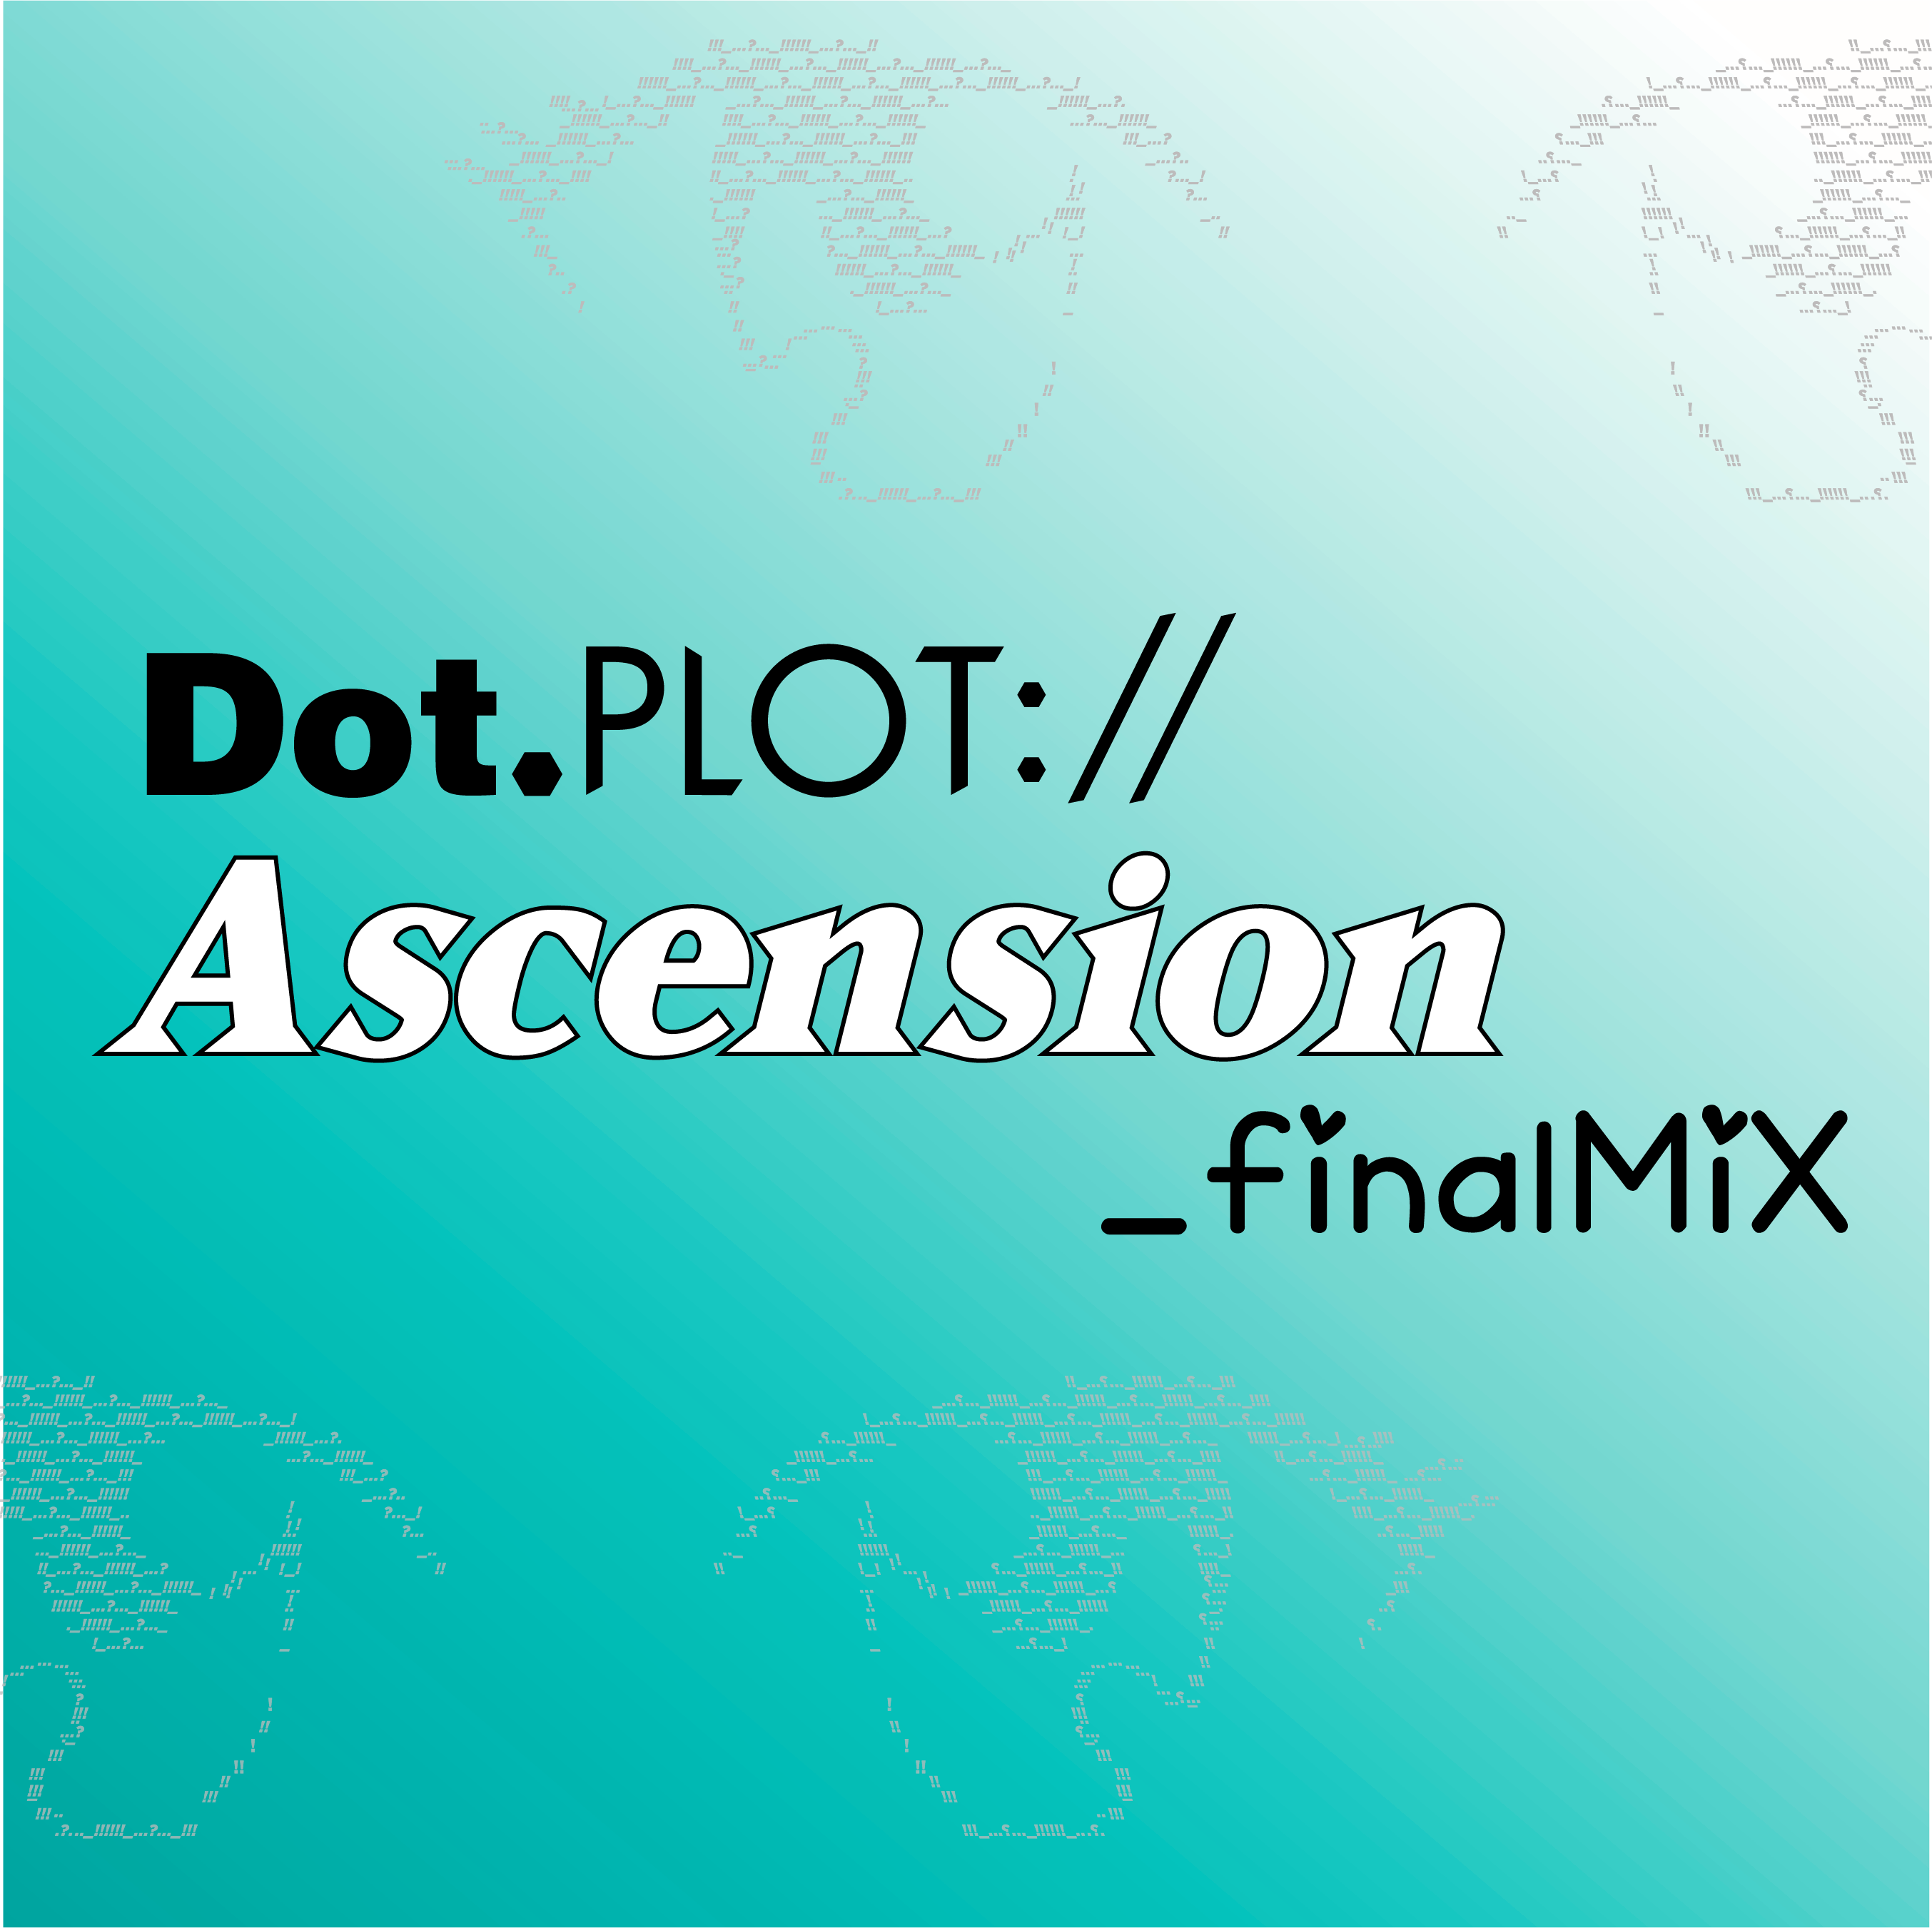 Dot.plot://Ascension_finalMix: after_DARK